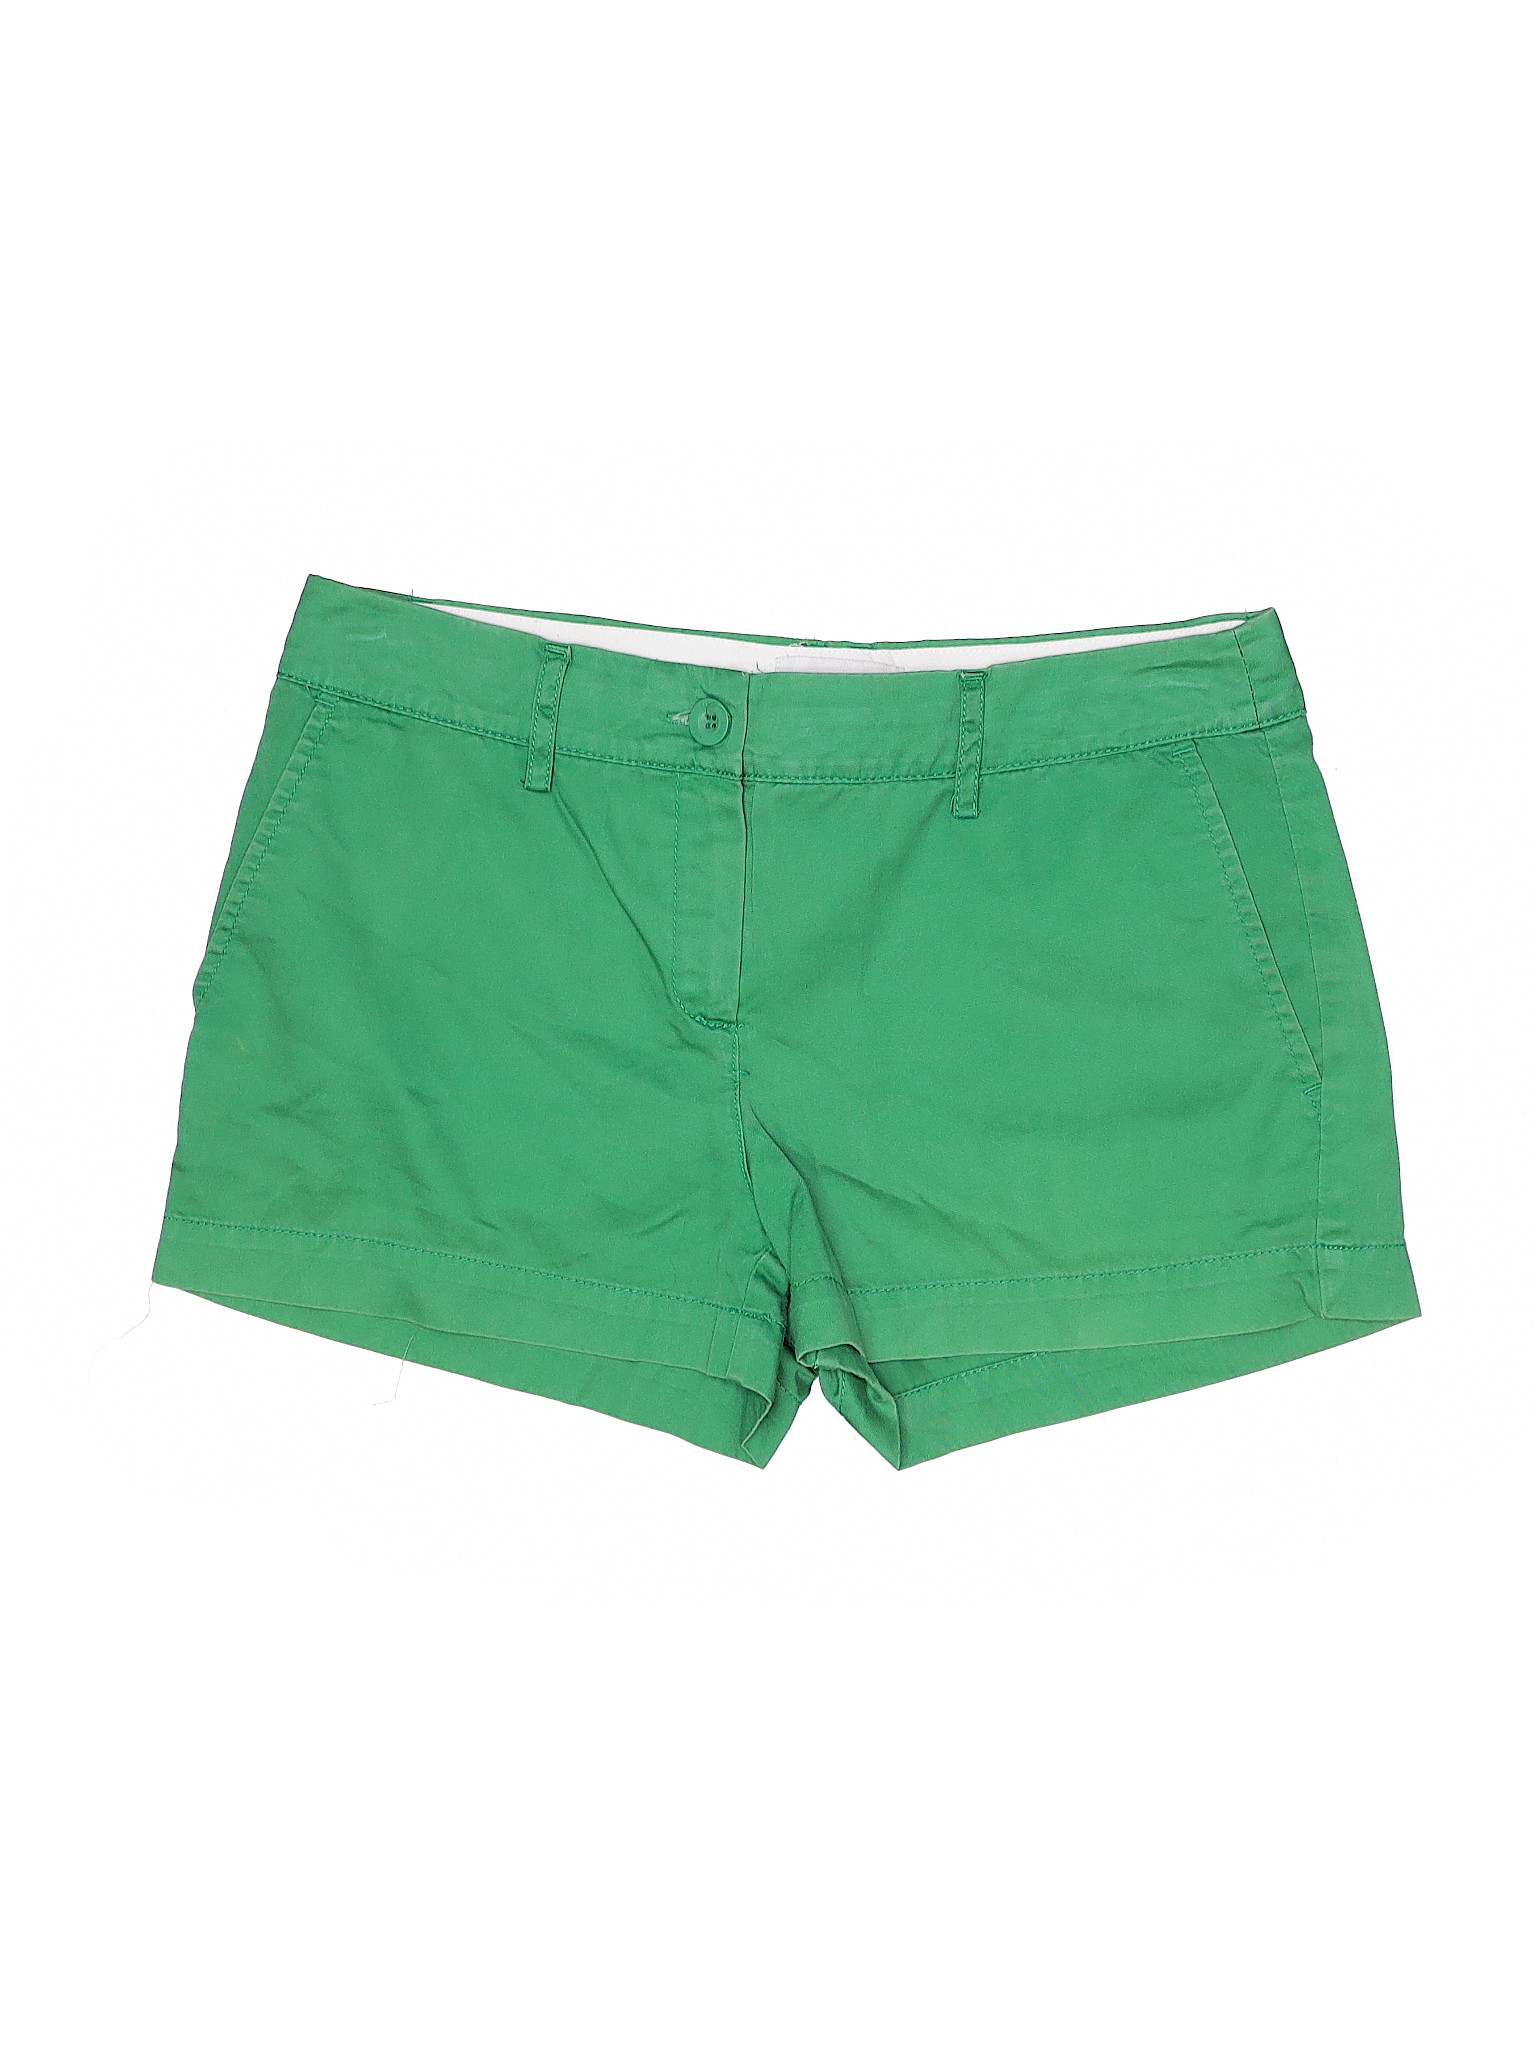 MNG Women Green Khaki Shorts 6 | eBay